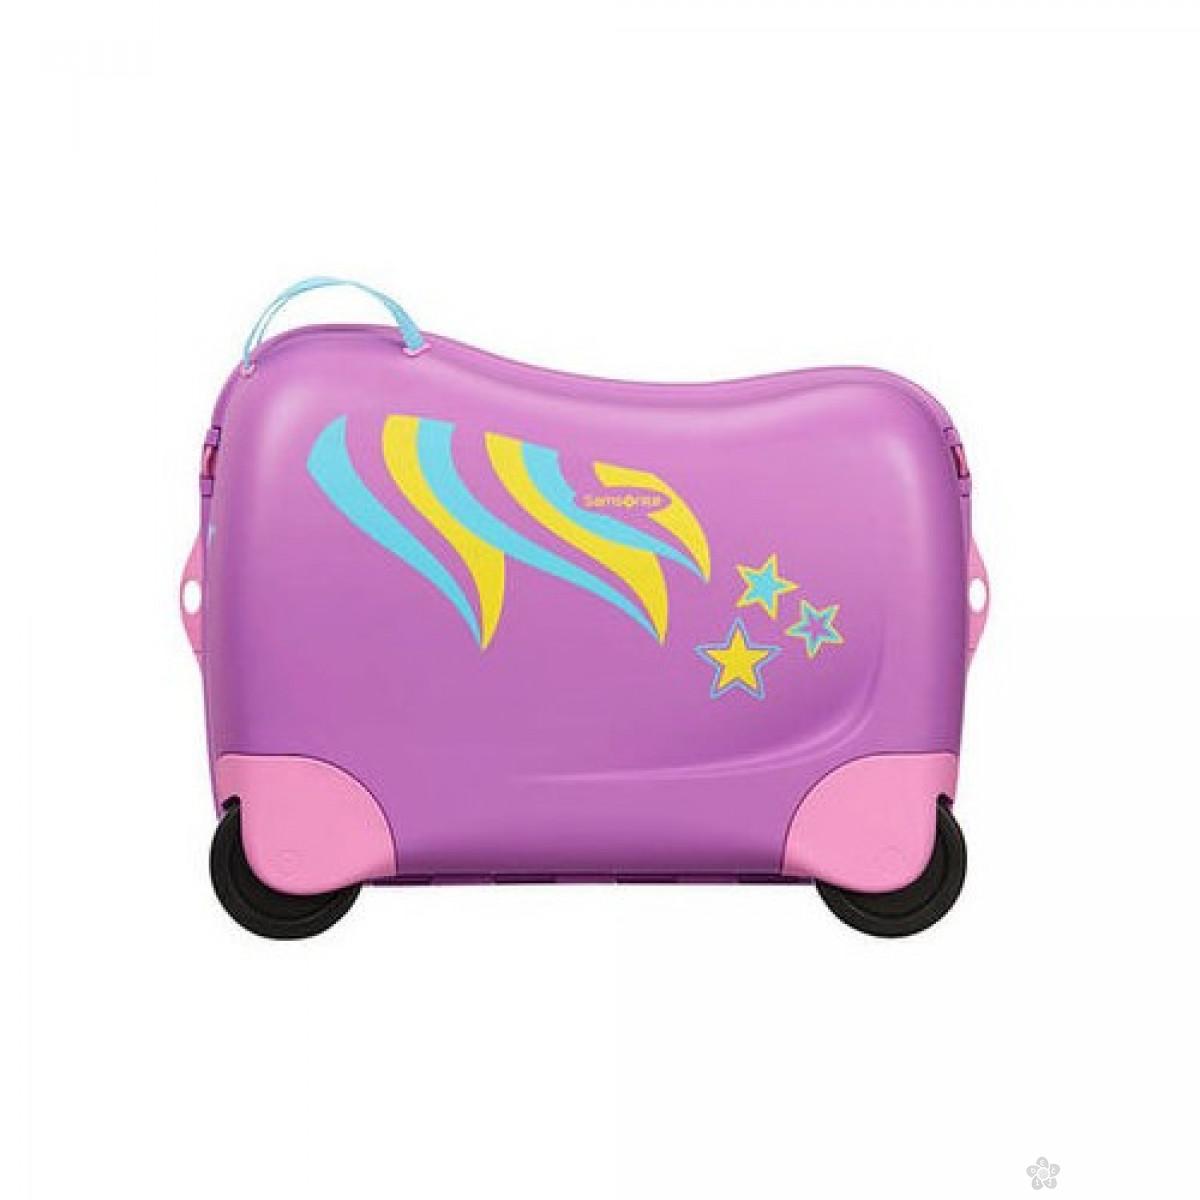 Samsonite kofer Pony Polly CK8*91001 